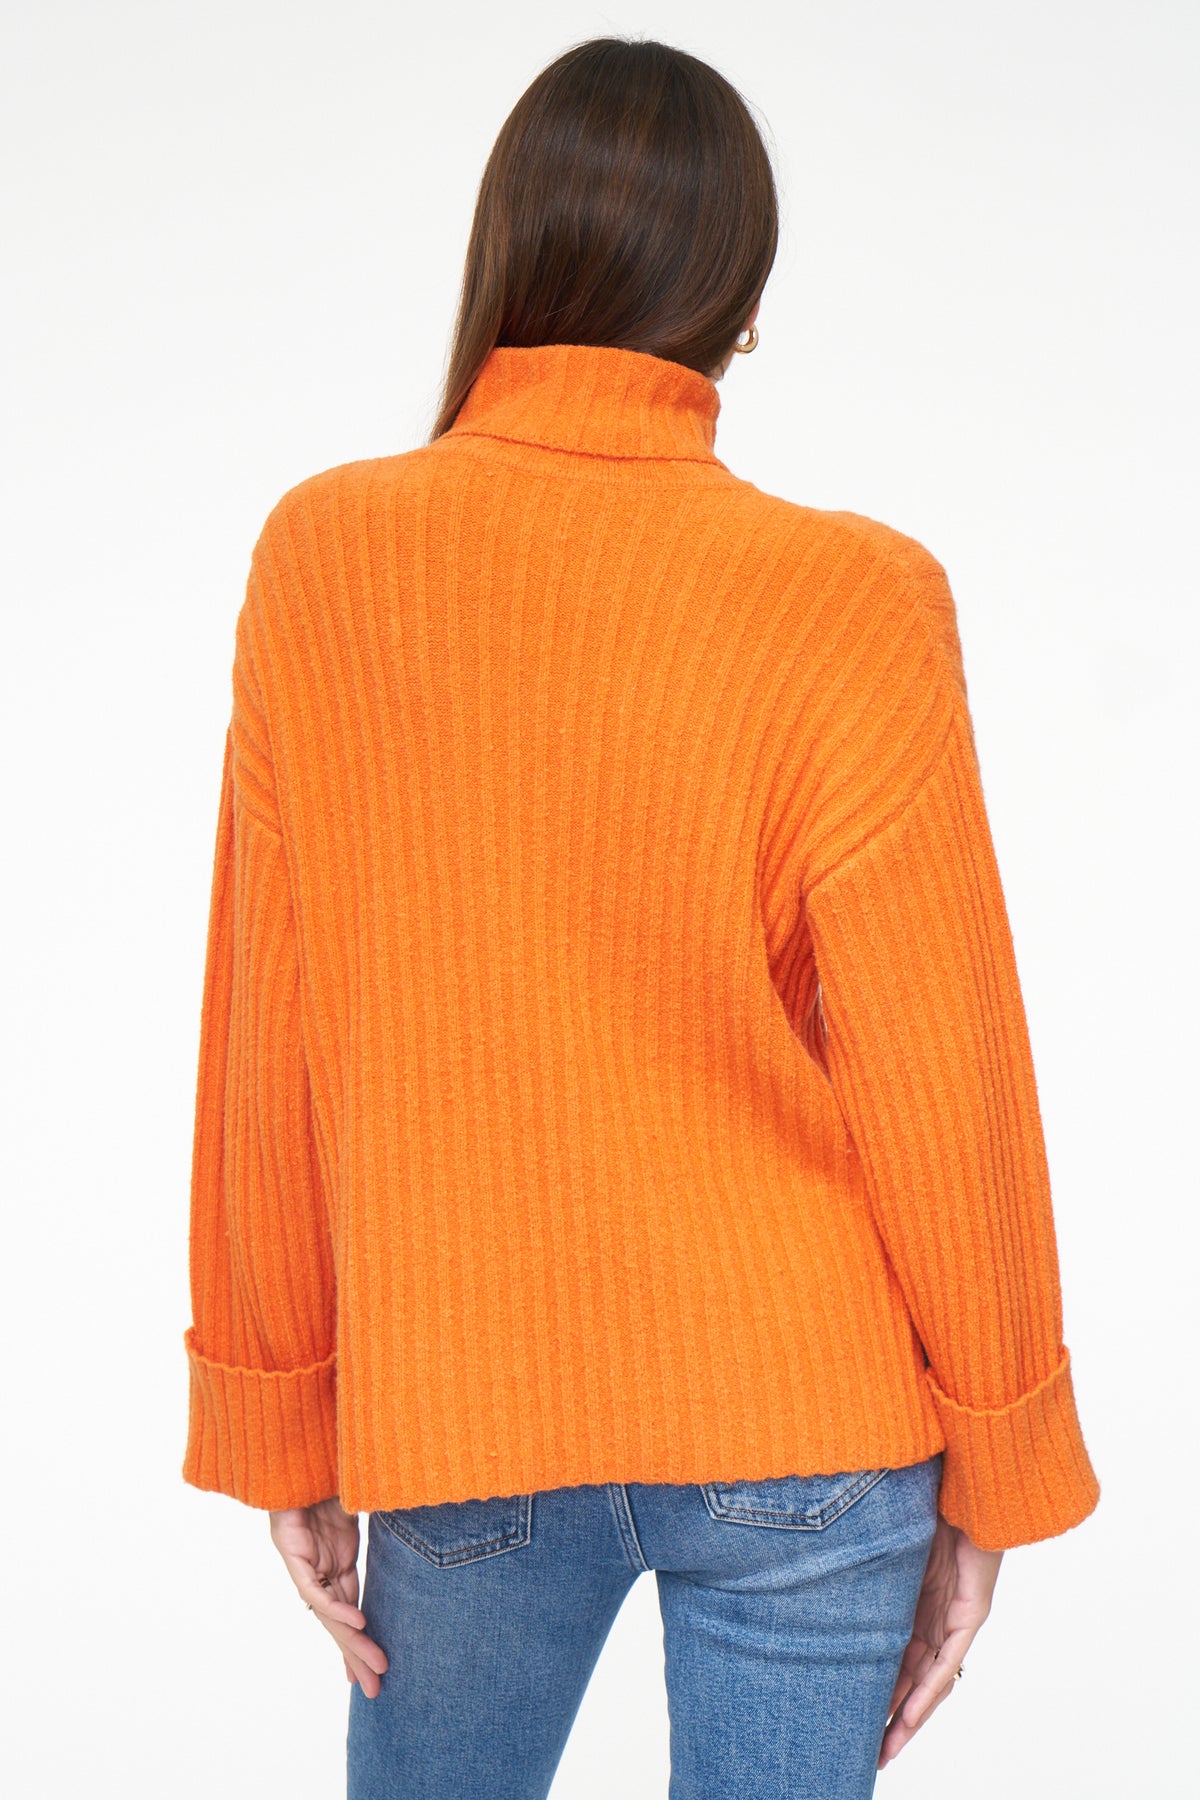 Dallas Relaxed Turtle Neck Sweater - Burnt Orange